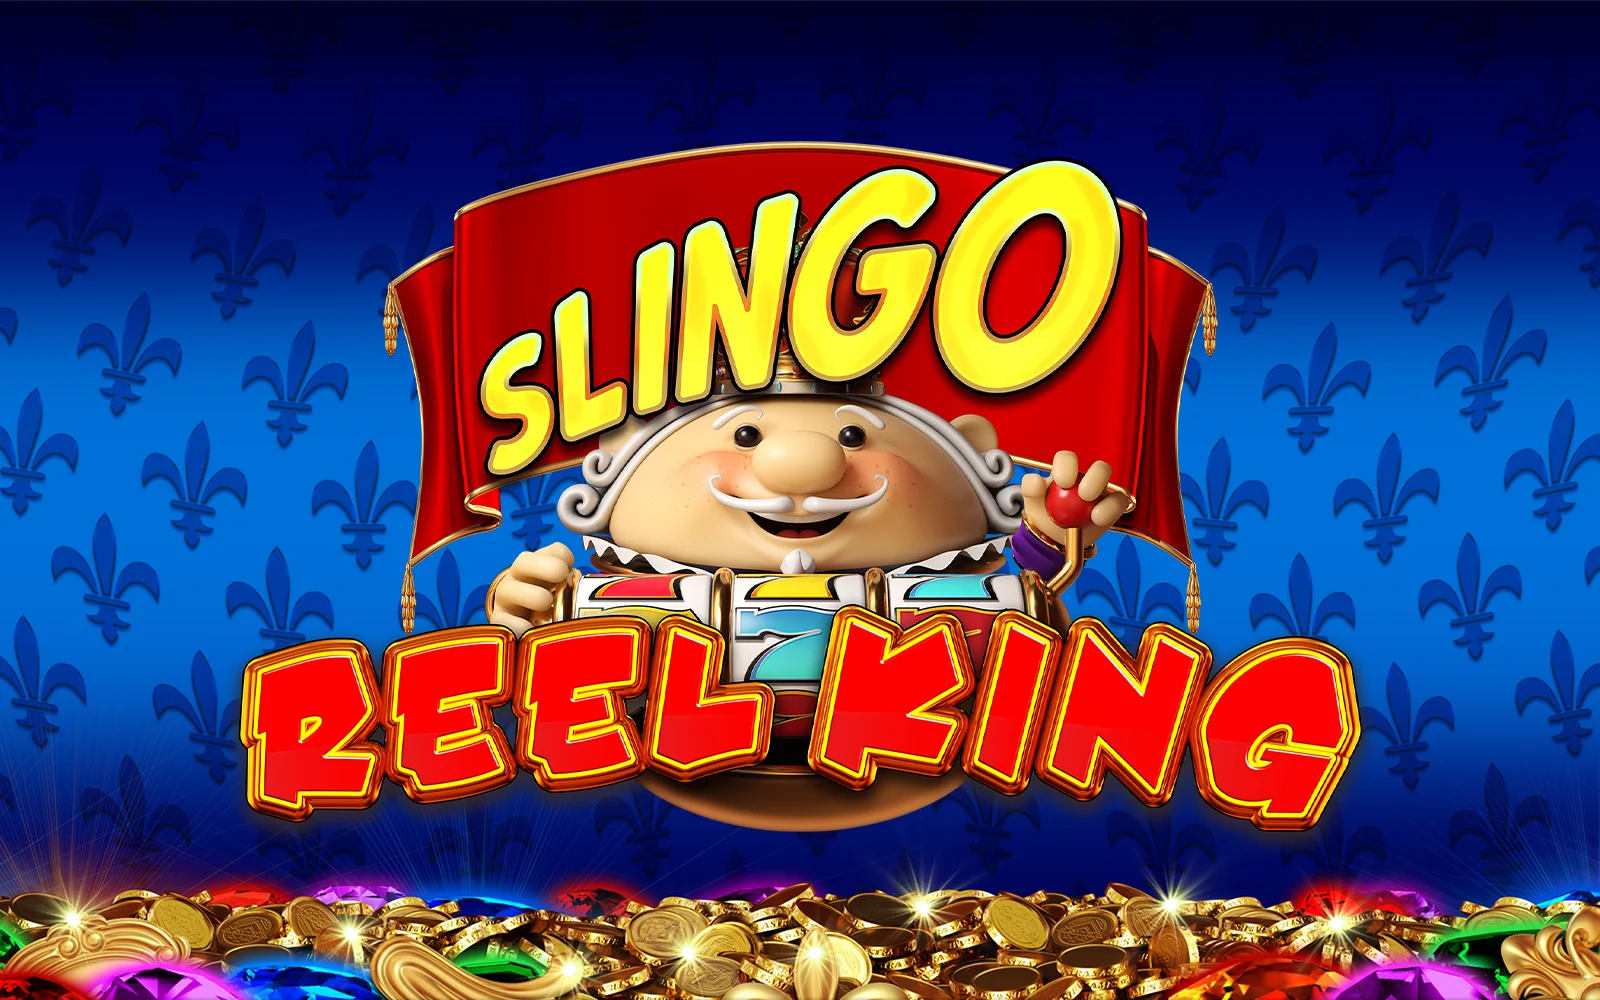 Joacă Slingo Reel King în cazinoul online Starcasino.be